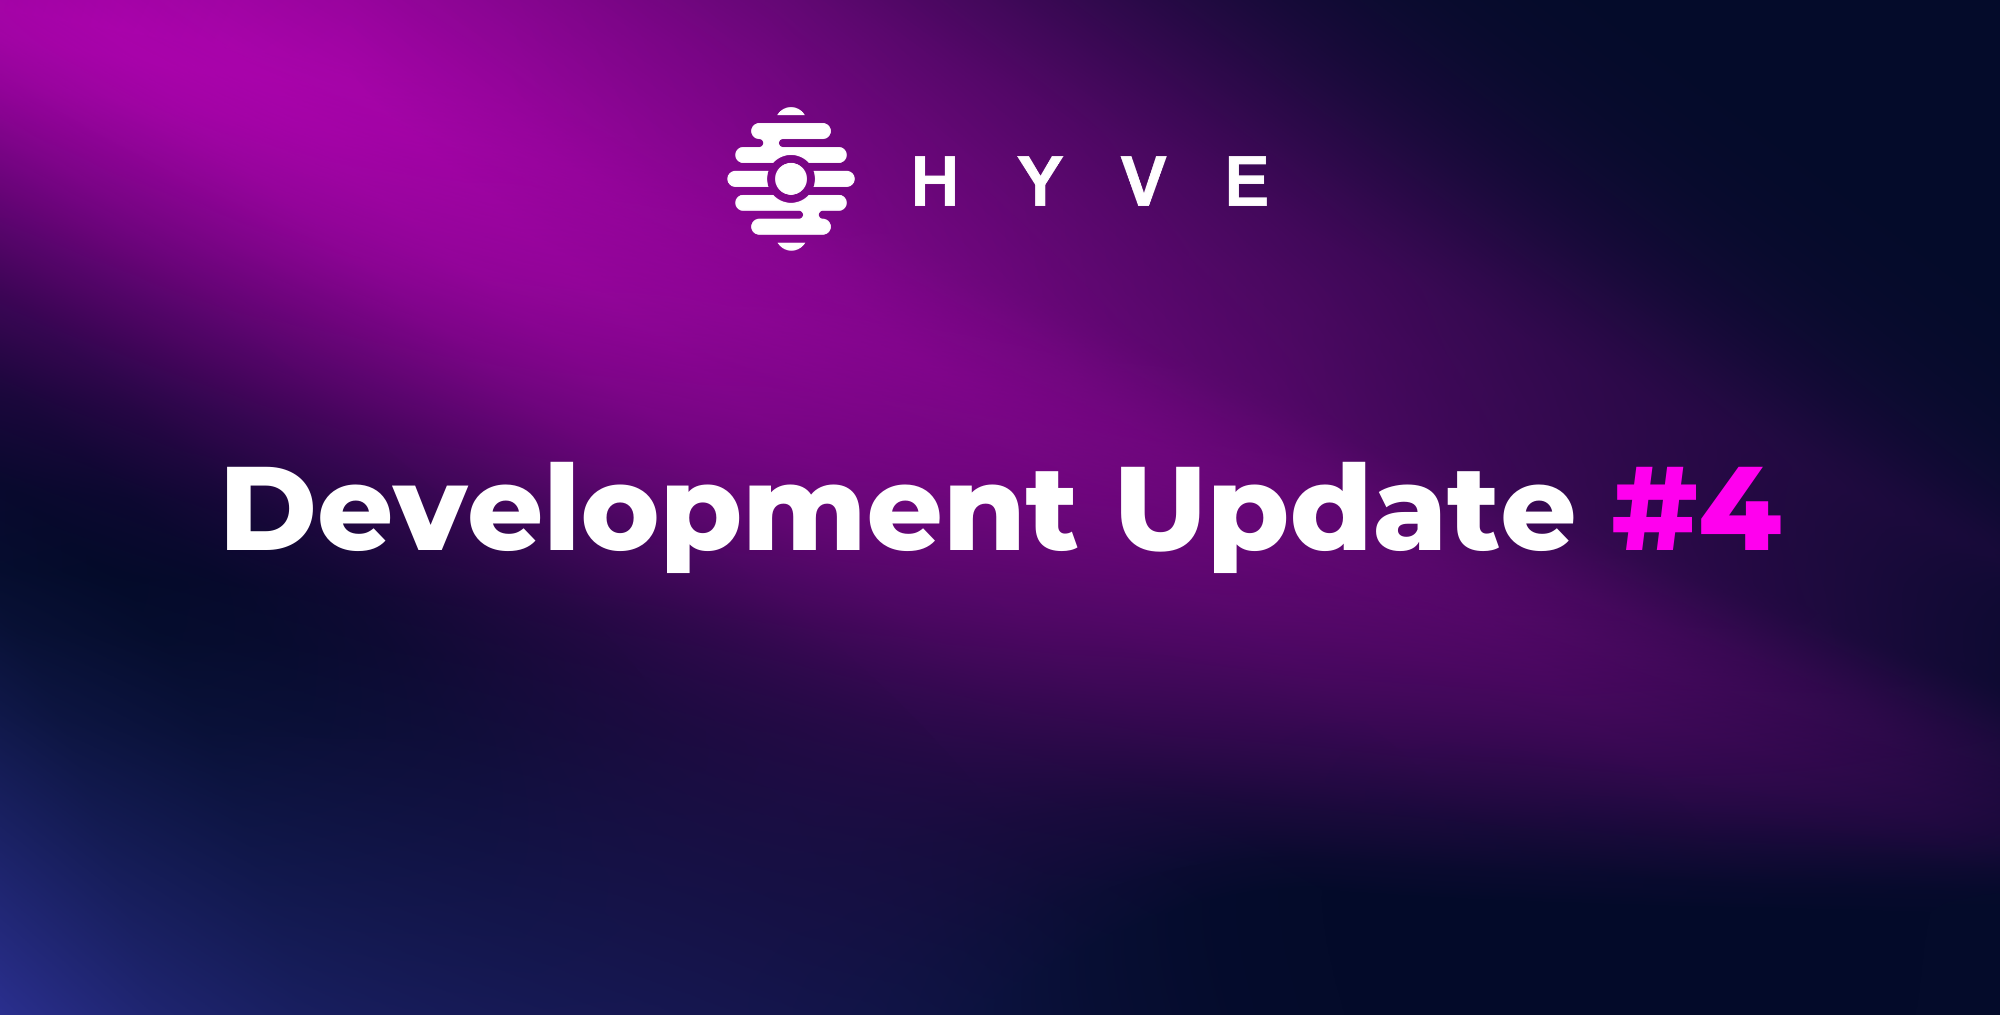 Development Update #4